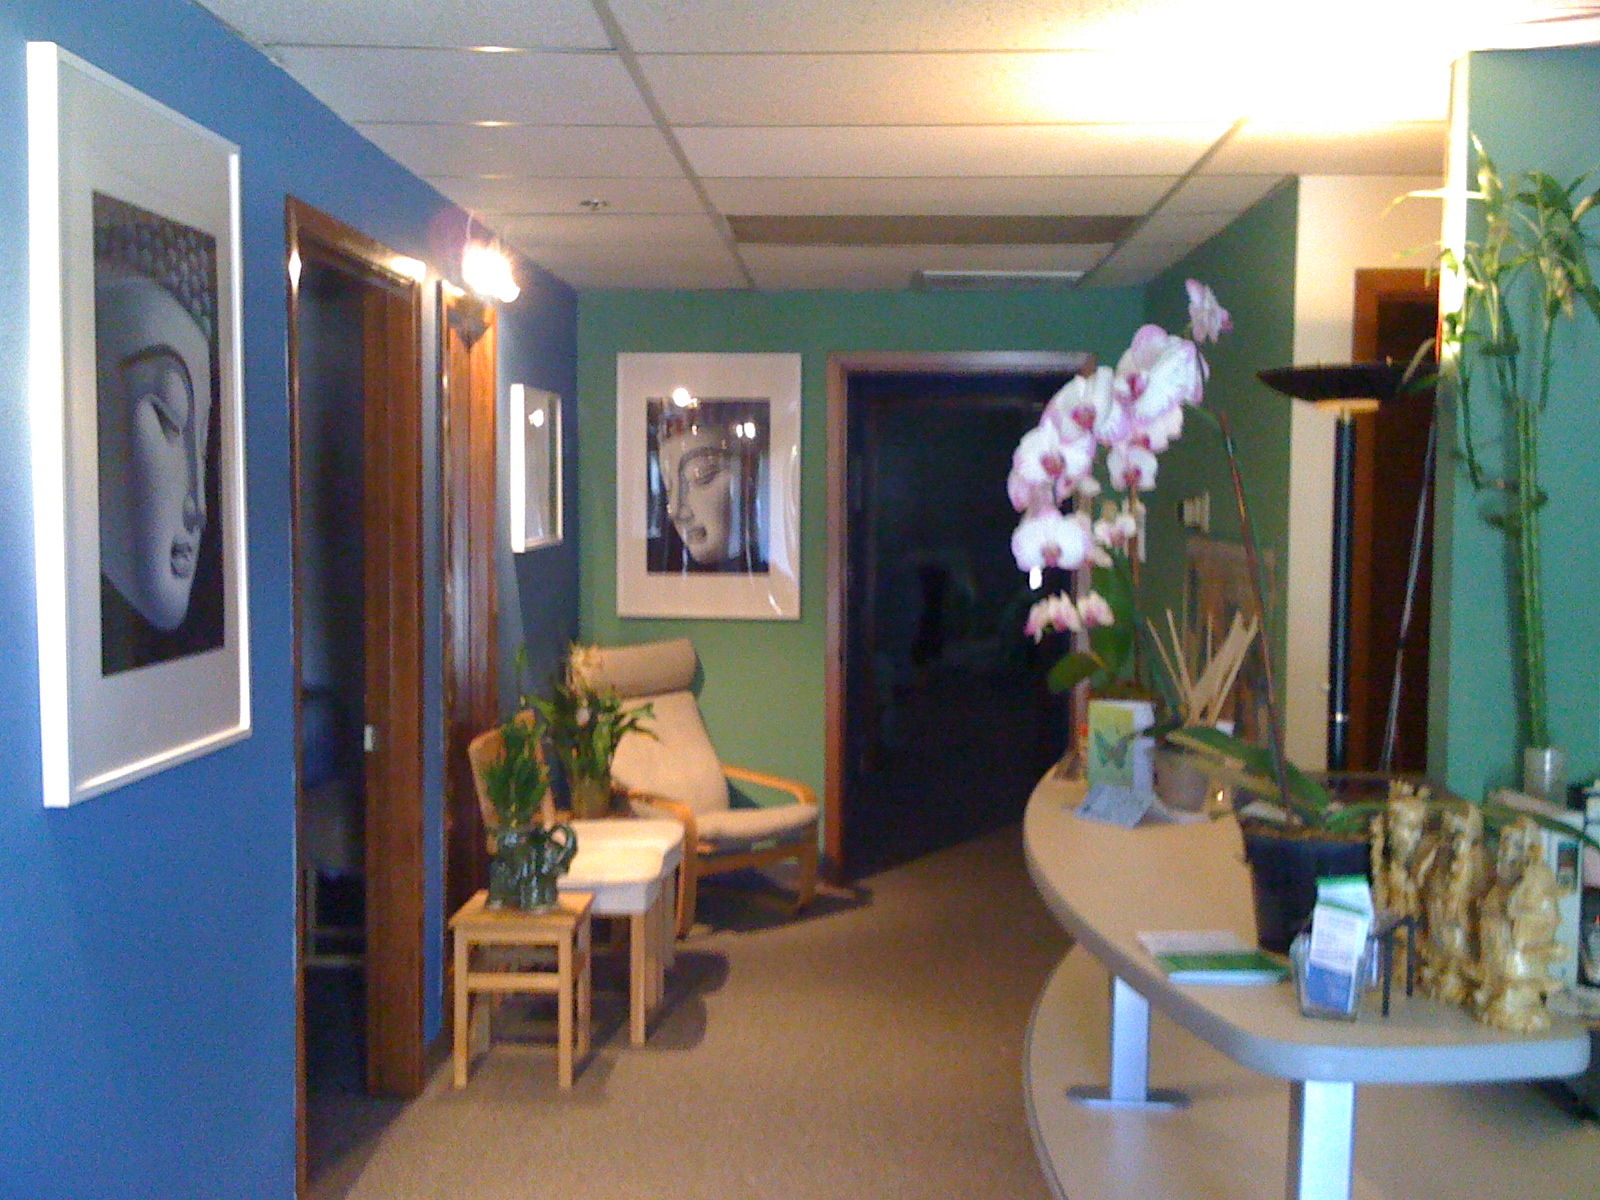 Living Room Acupuncture San Jose CA 95131 YPcom